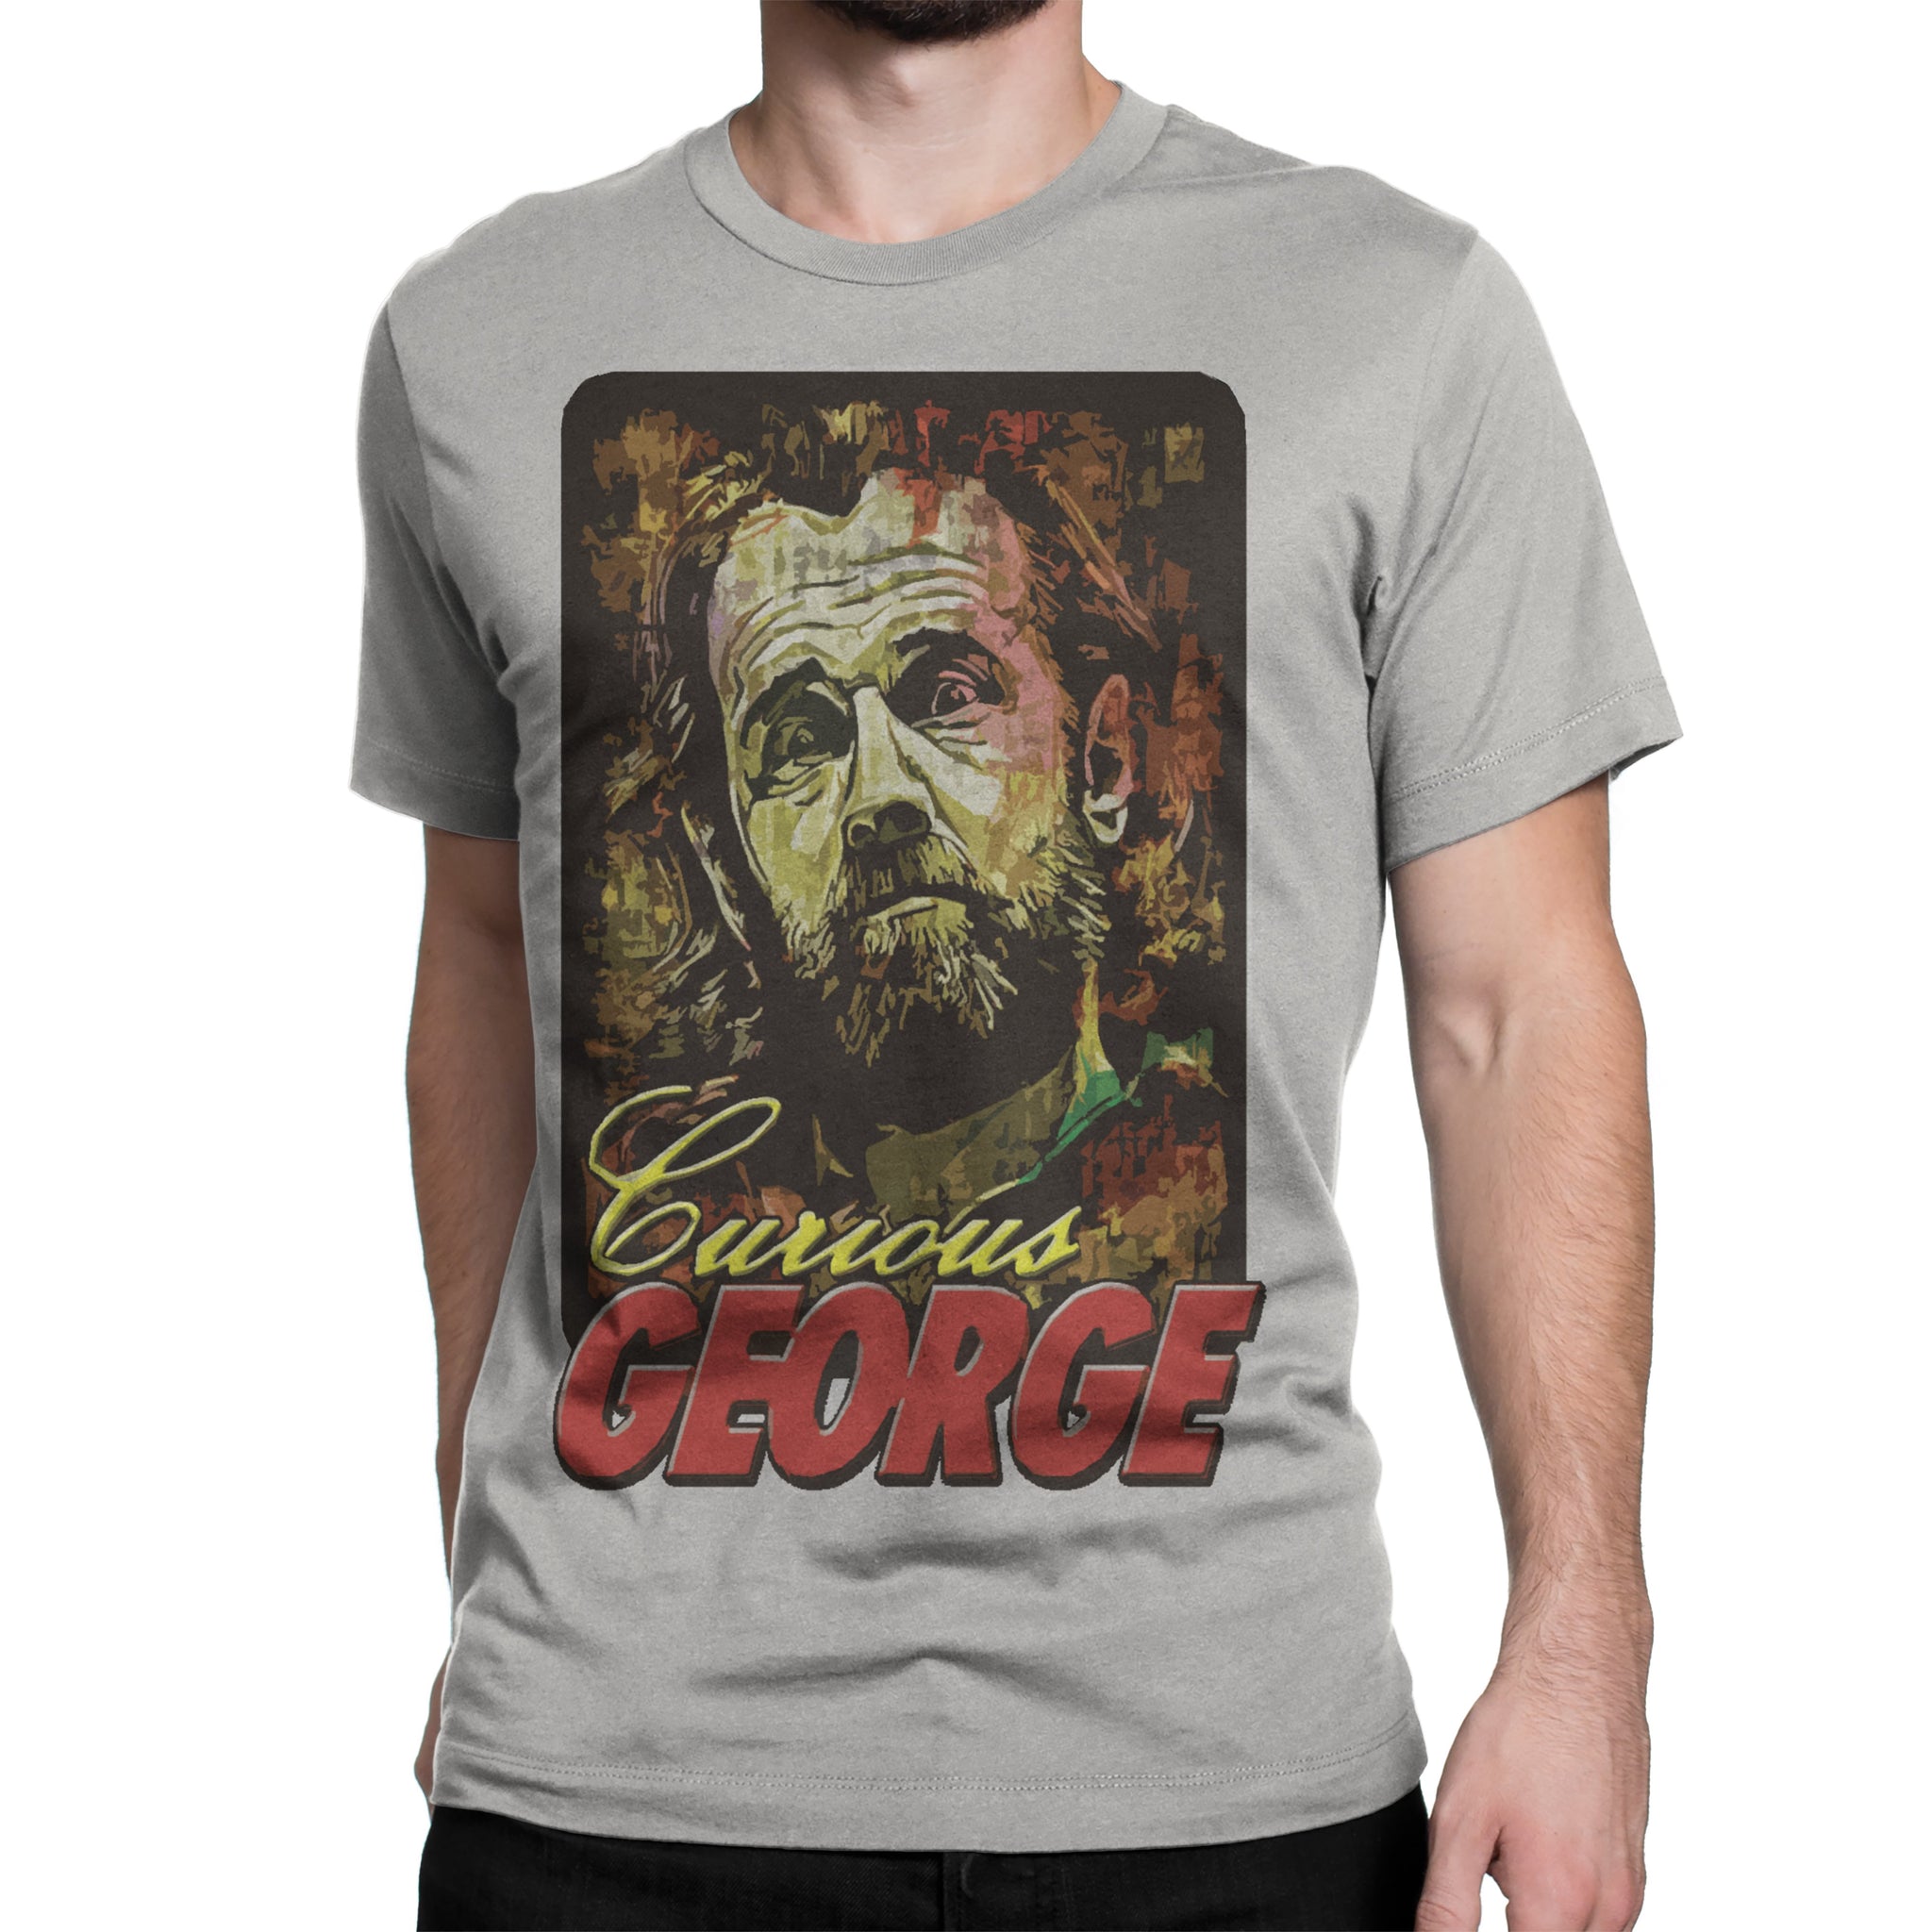 George Carlin "Curious George" shirt